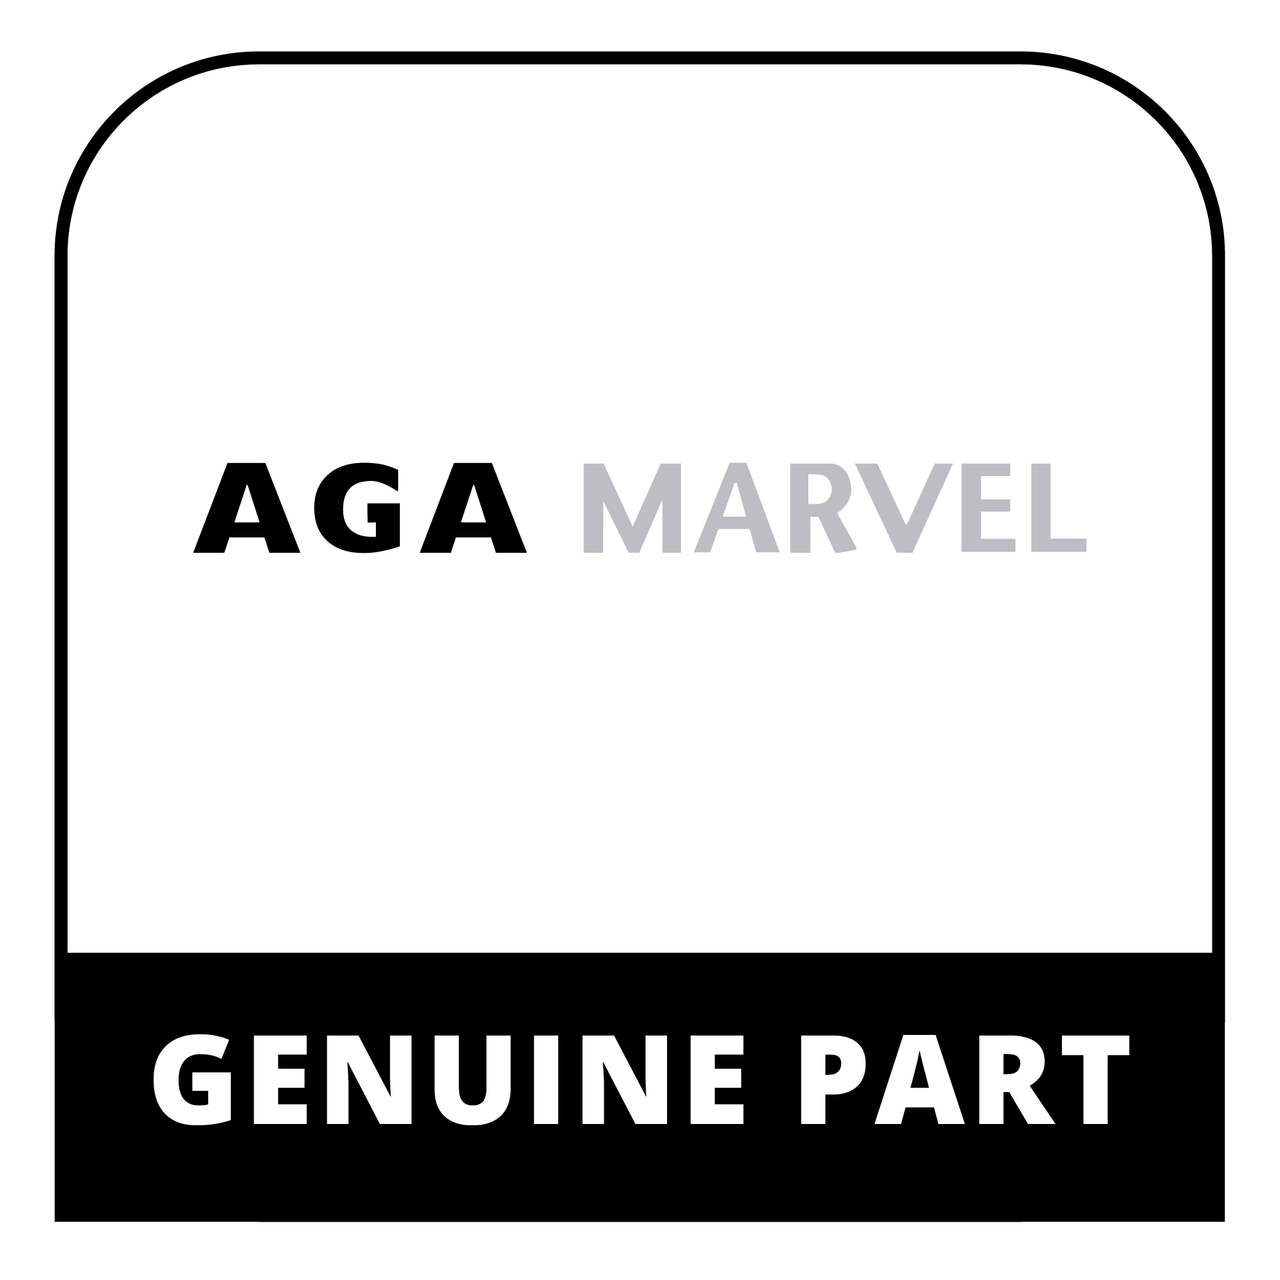 AGA Marvel CHIPCARDCLT - Card With Colour Chip Attached-Clt - Genuine AGA Marvel Part